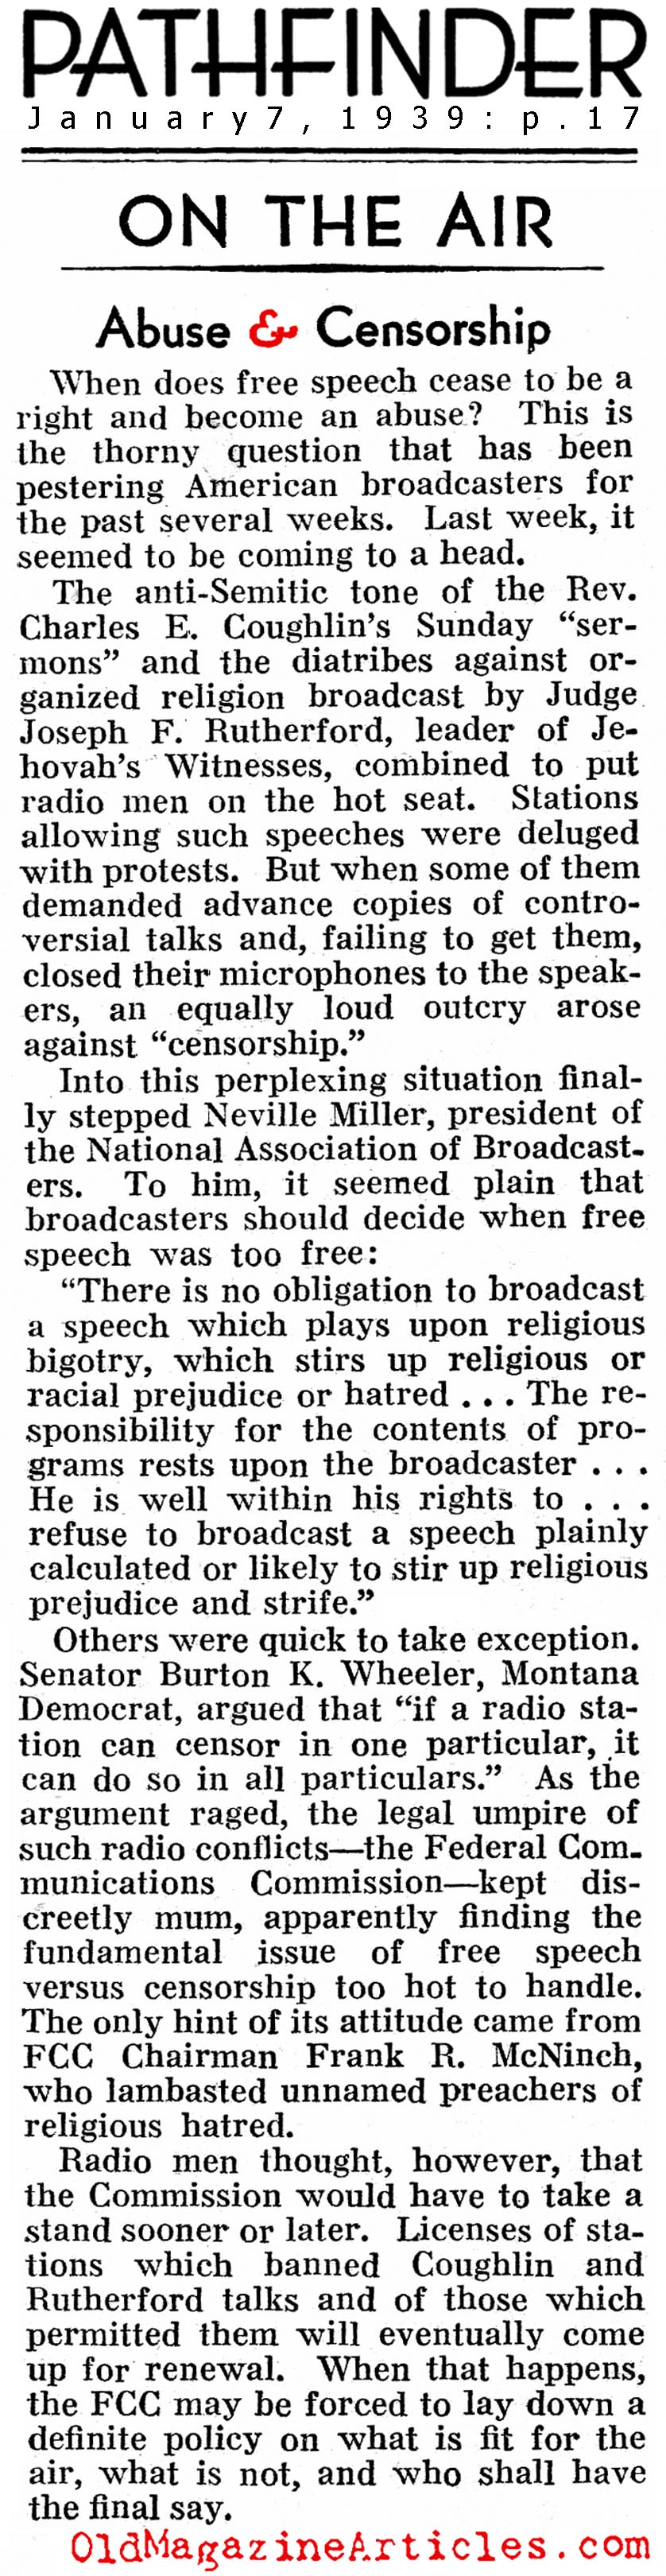 The Free Speech Dilemma <BR>(Pathfinder Magazine, 1939)